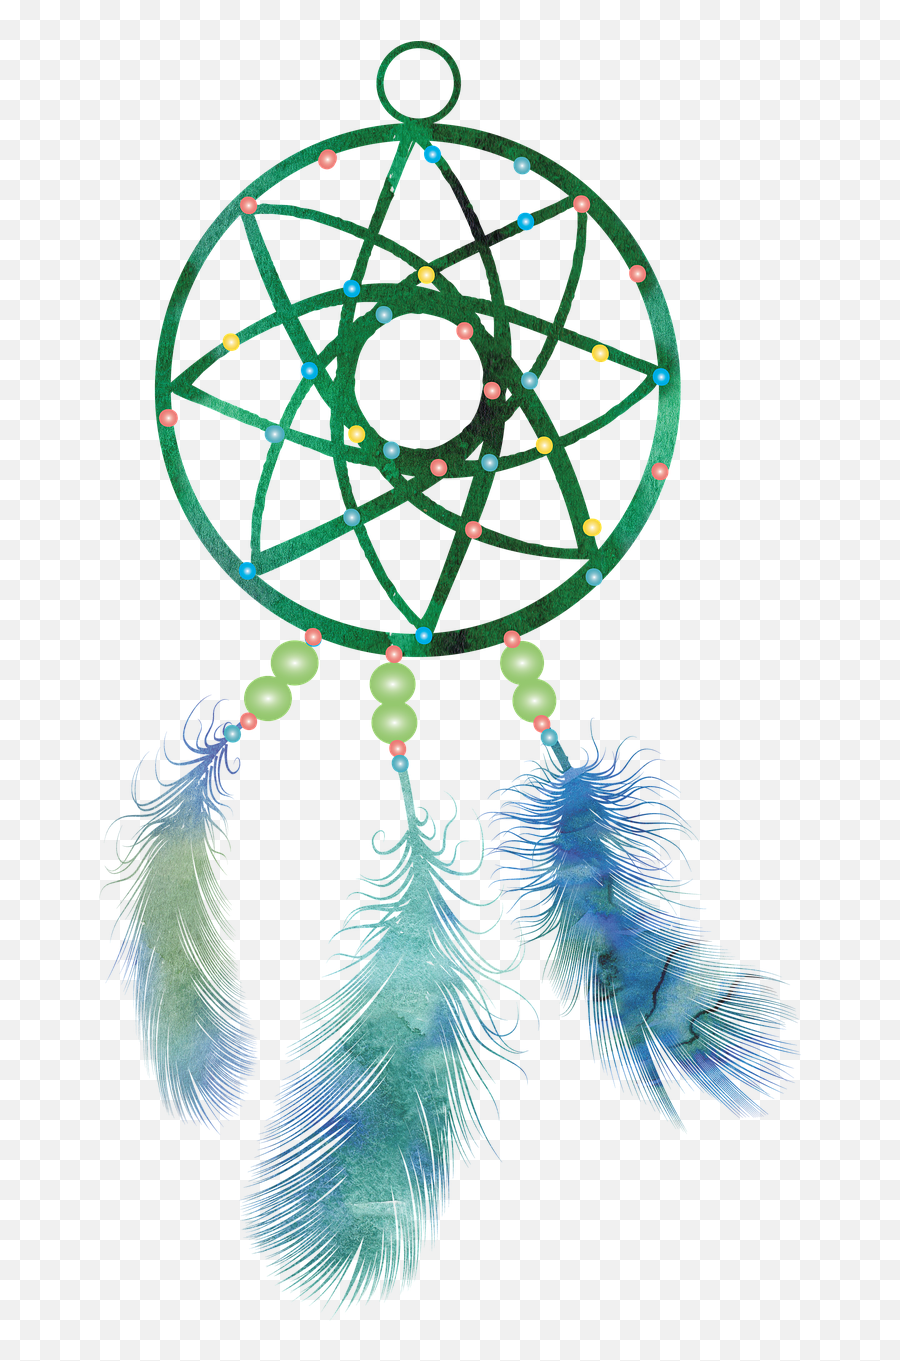 Dreamcatcher Watercolor Feathers - Free Image On Pixabay Dessin Attrape Reve Facile Png,Dreamcatcher Png